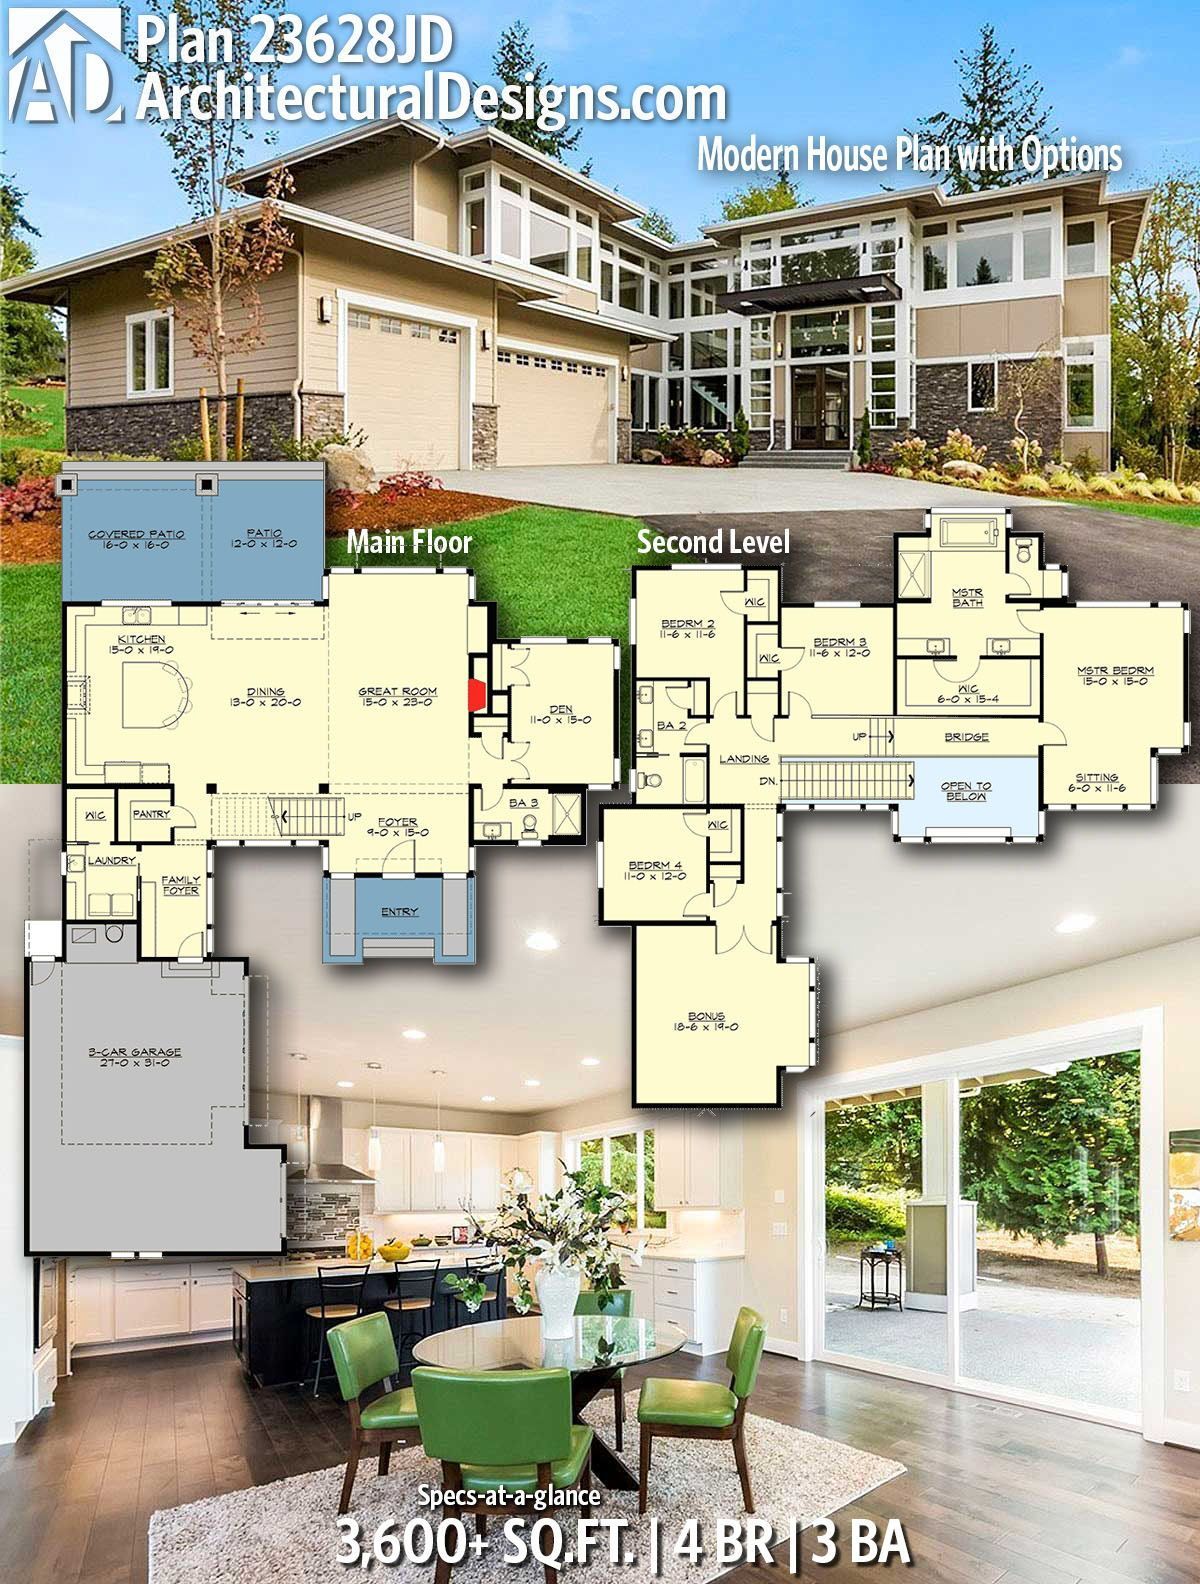 Gartendesign Modern Elegant Plan Jd Modern House Plan with Options In 2019